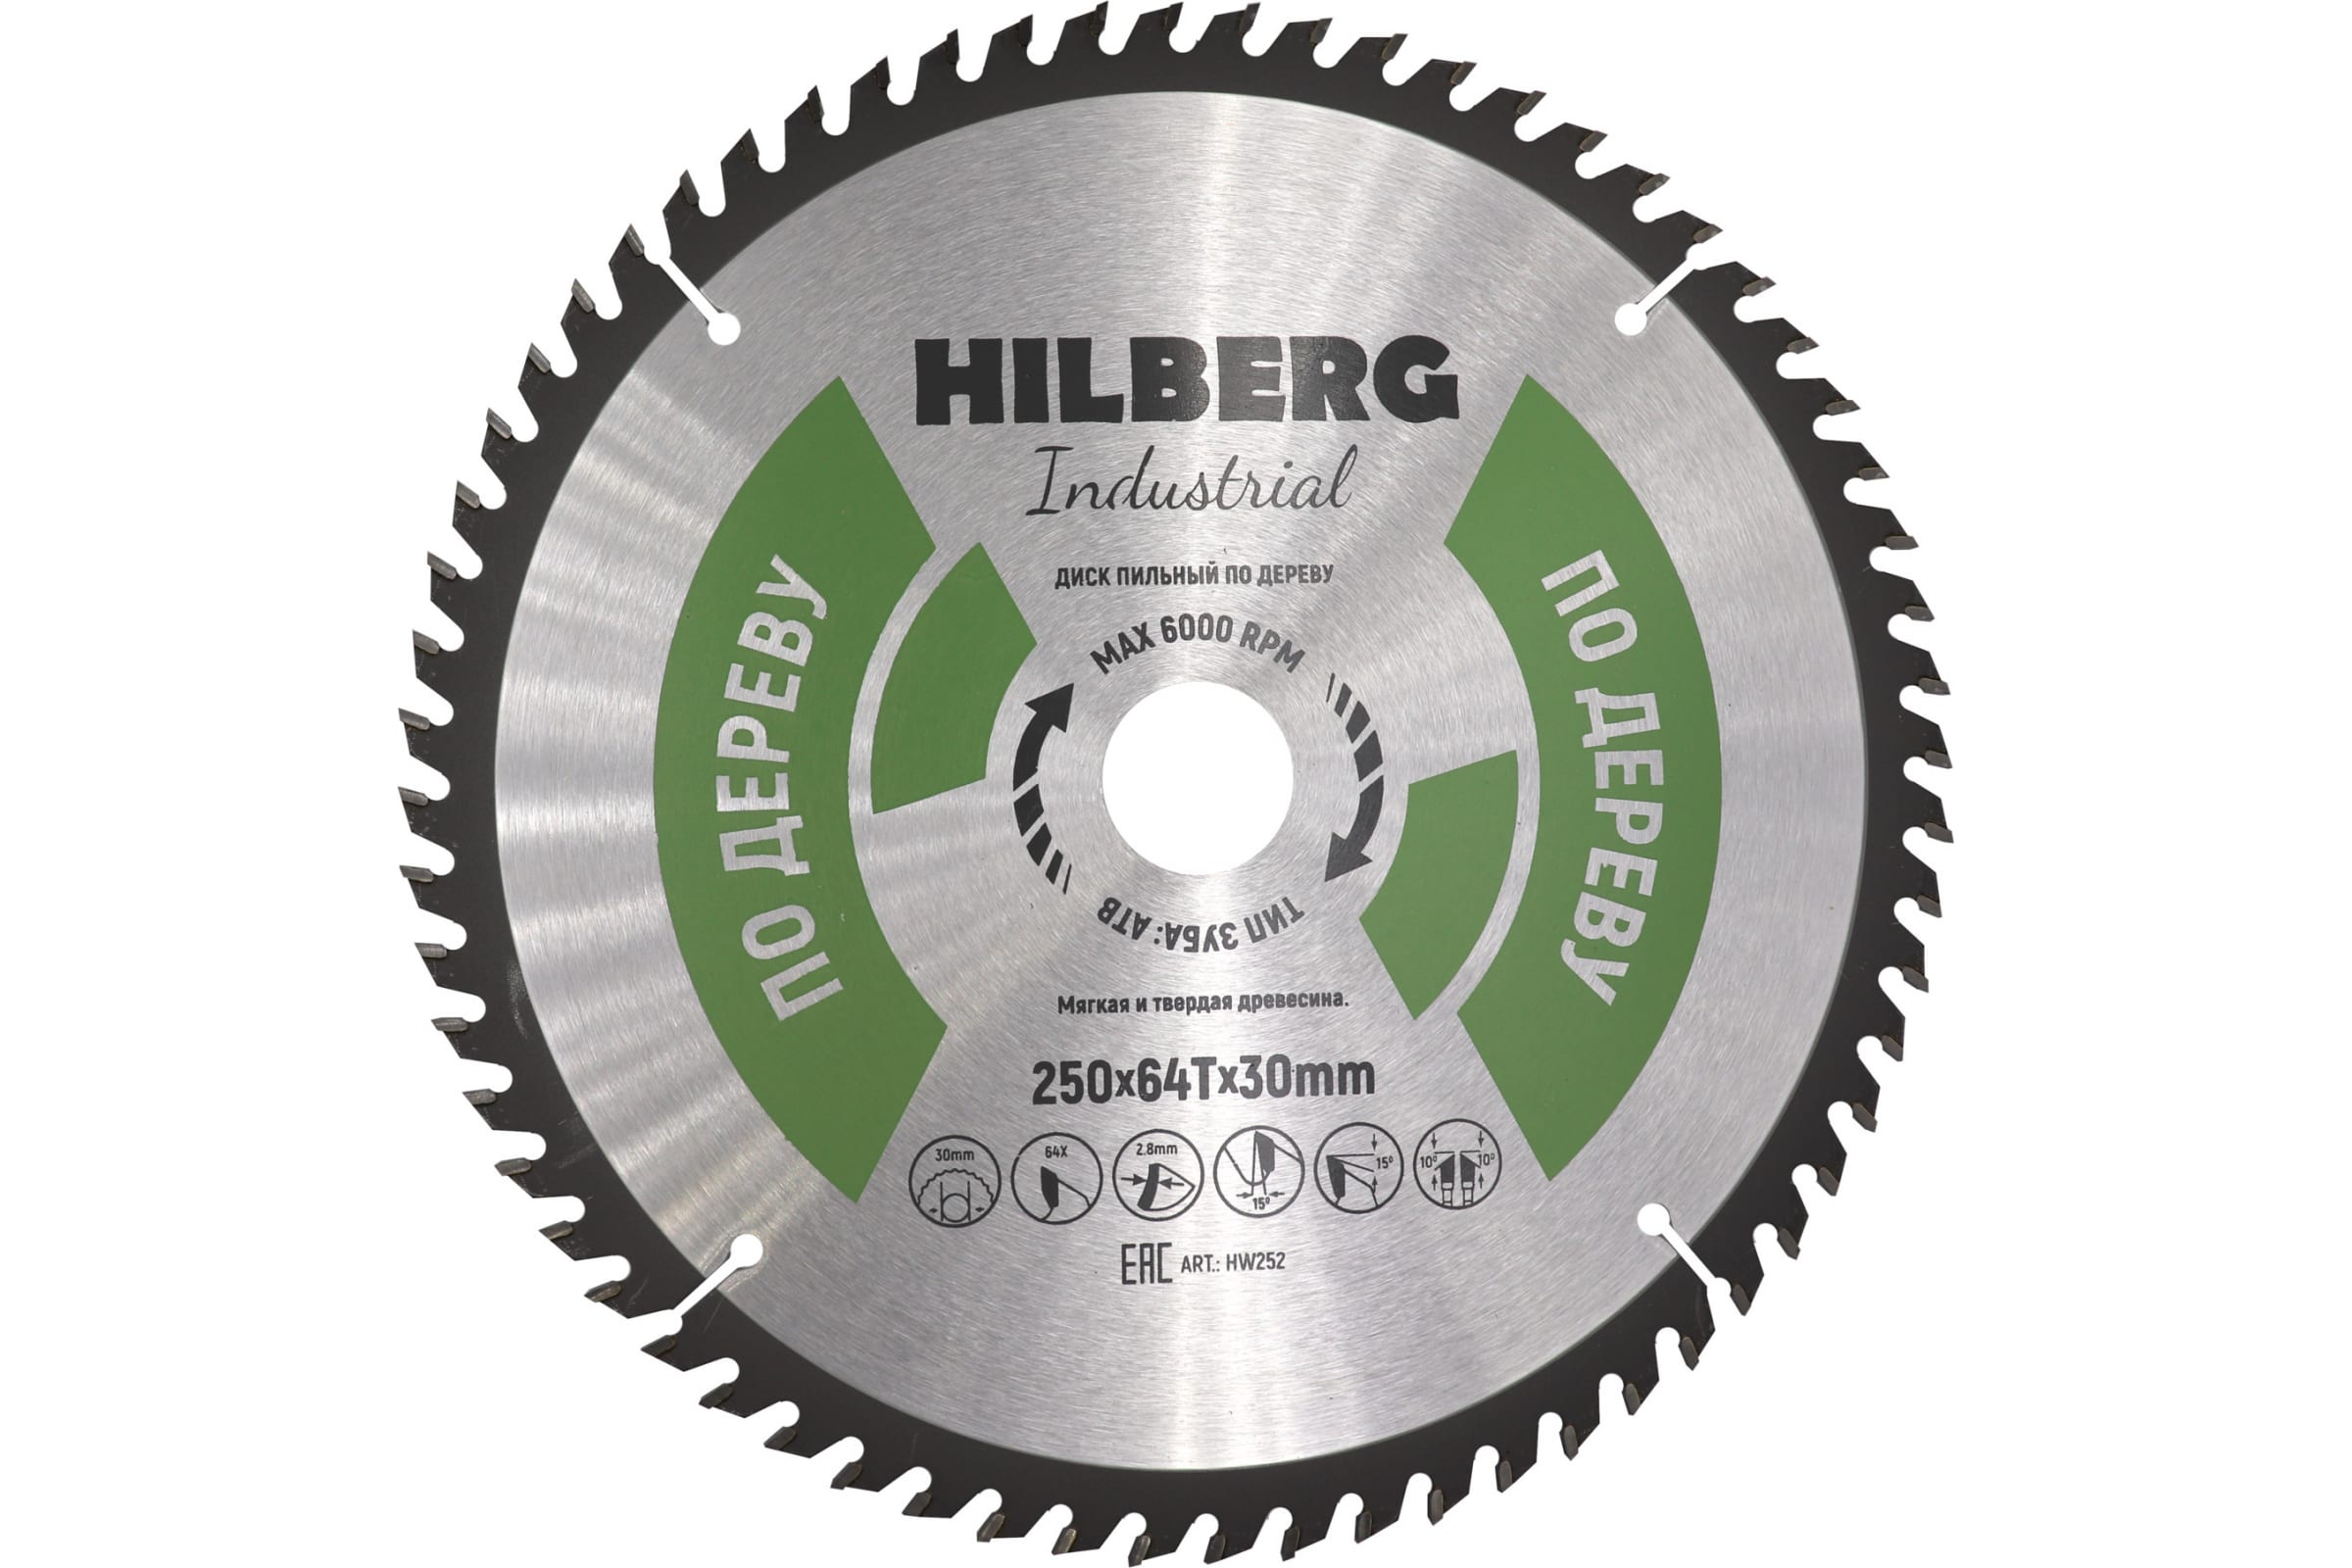 фото Hilberg диск пильный hilberg industrial дерево 250x30x64т hw252